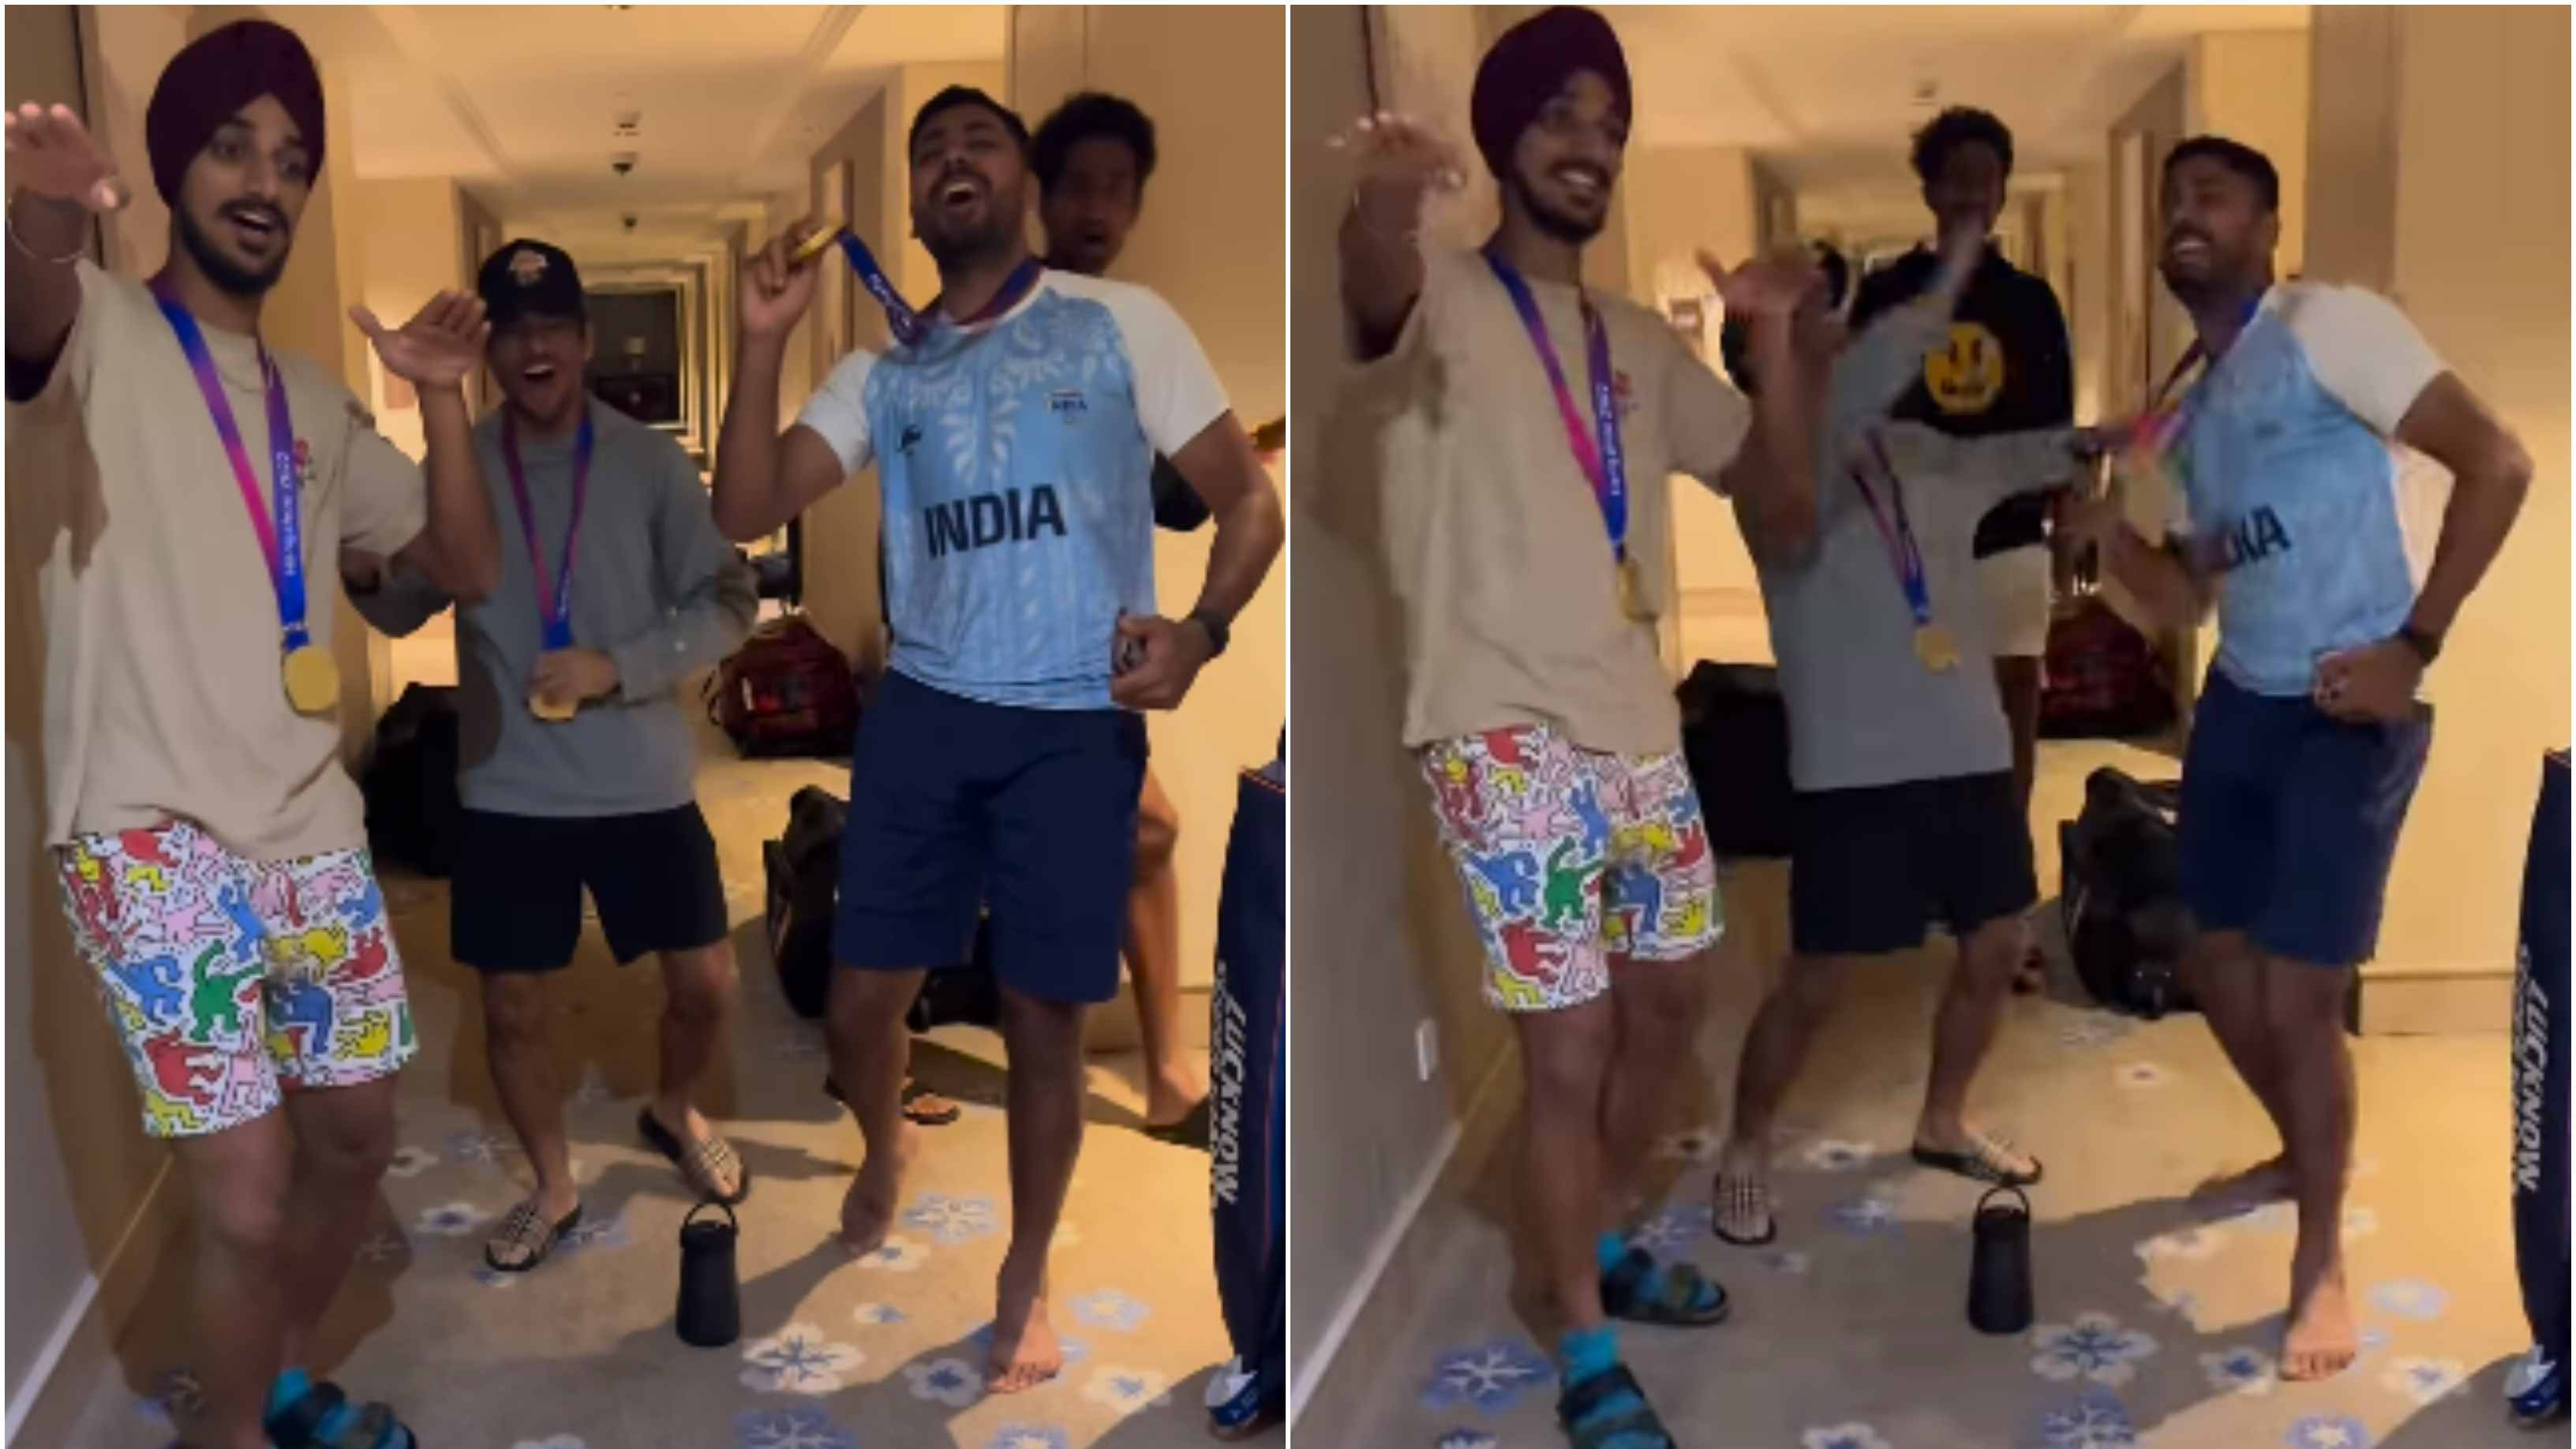 WATCH: Ravi Bishnoi, Arshdeep Singh, Avesh Khan sing “Lehra Do” song after helping India win gold medal in Asian Games